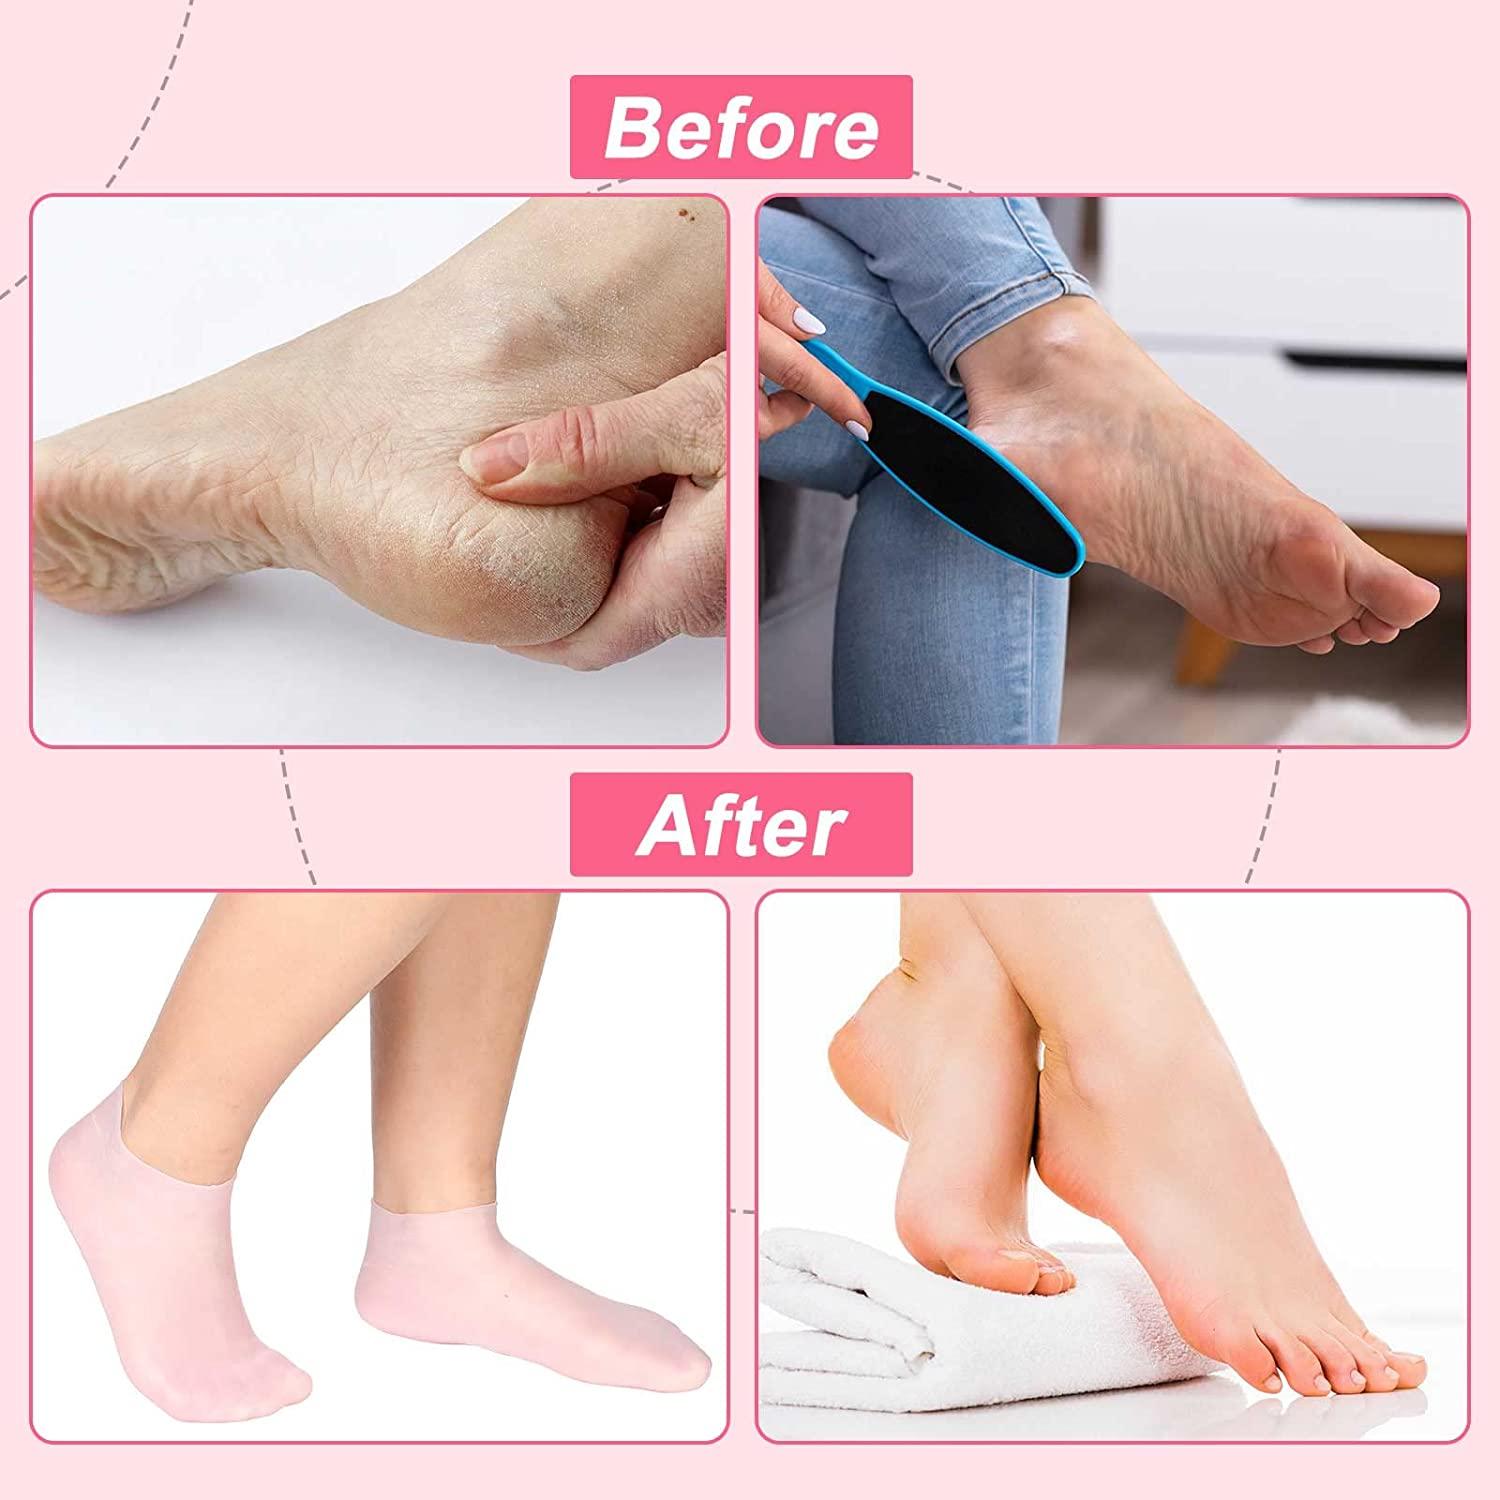 SATINIOR Silicone Socks 3 Pairs Aloe Socks Silicone Gel Heel Socks Anti  Slip Silicone Moisturizing Socks for Women Men Dry Cracking Skin (Medium),  Pink, Beige and White,Medium 